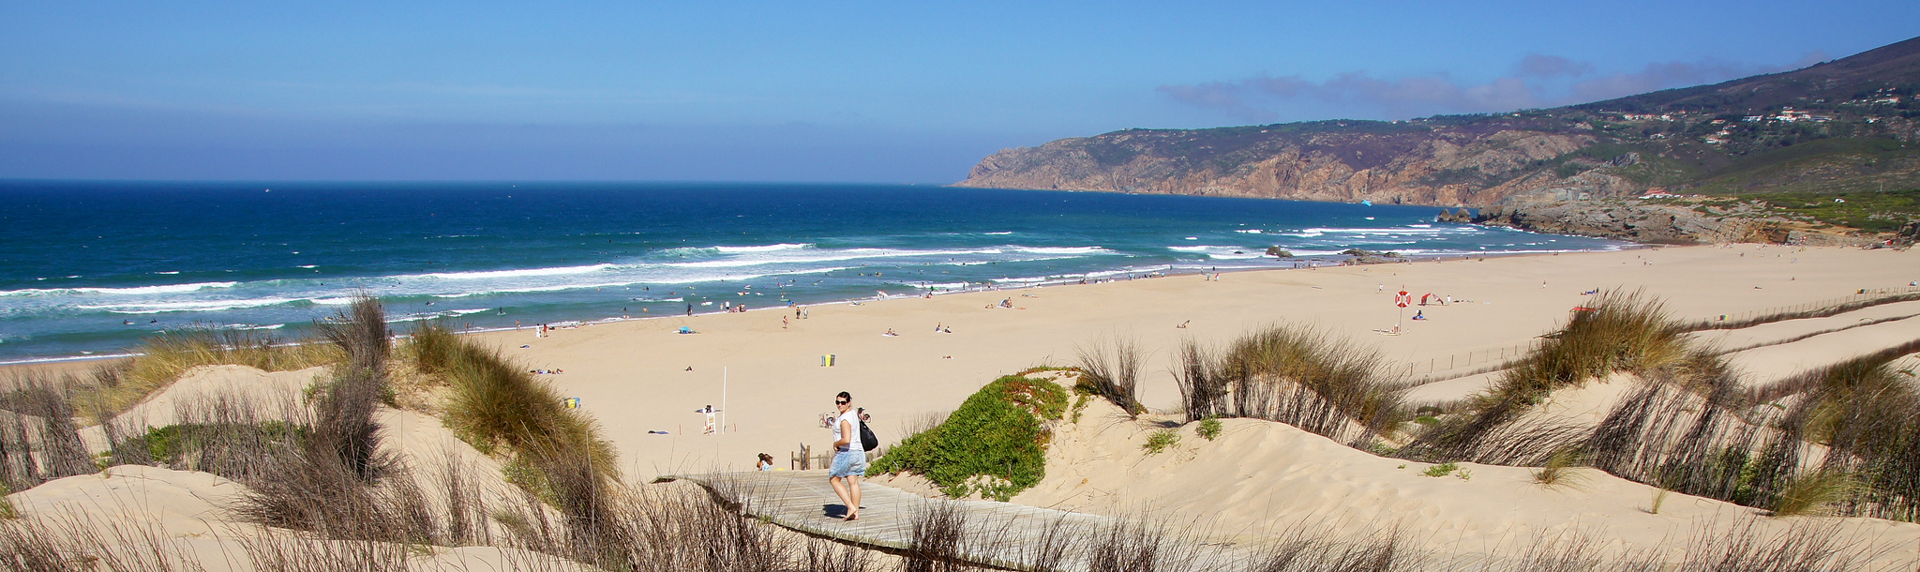 Surfen in Portugal: Praia do GuinchoLisbon